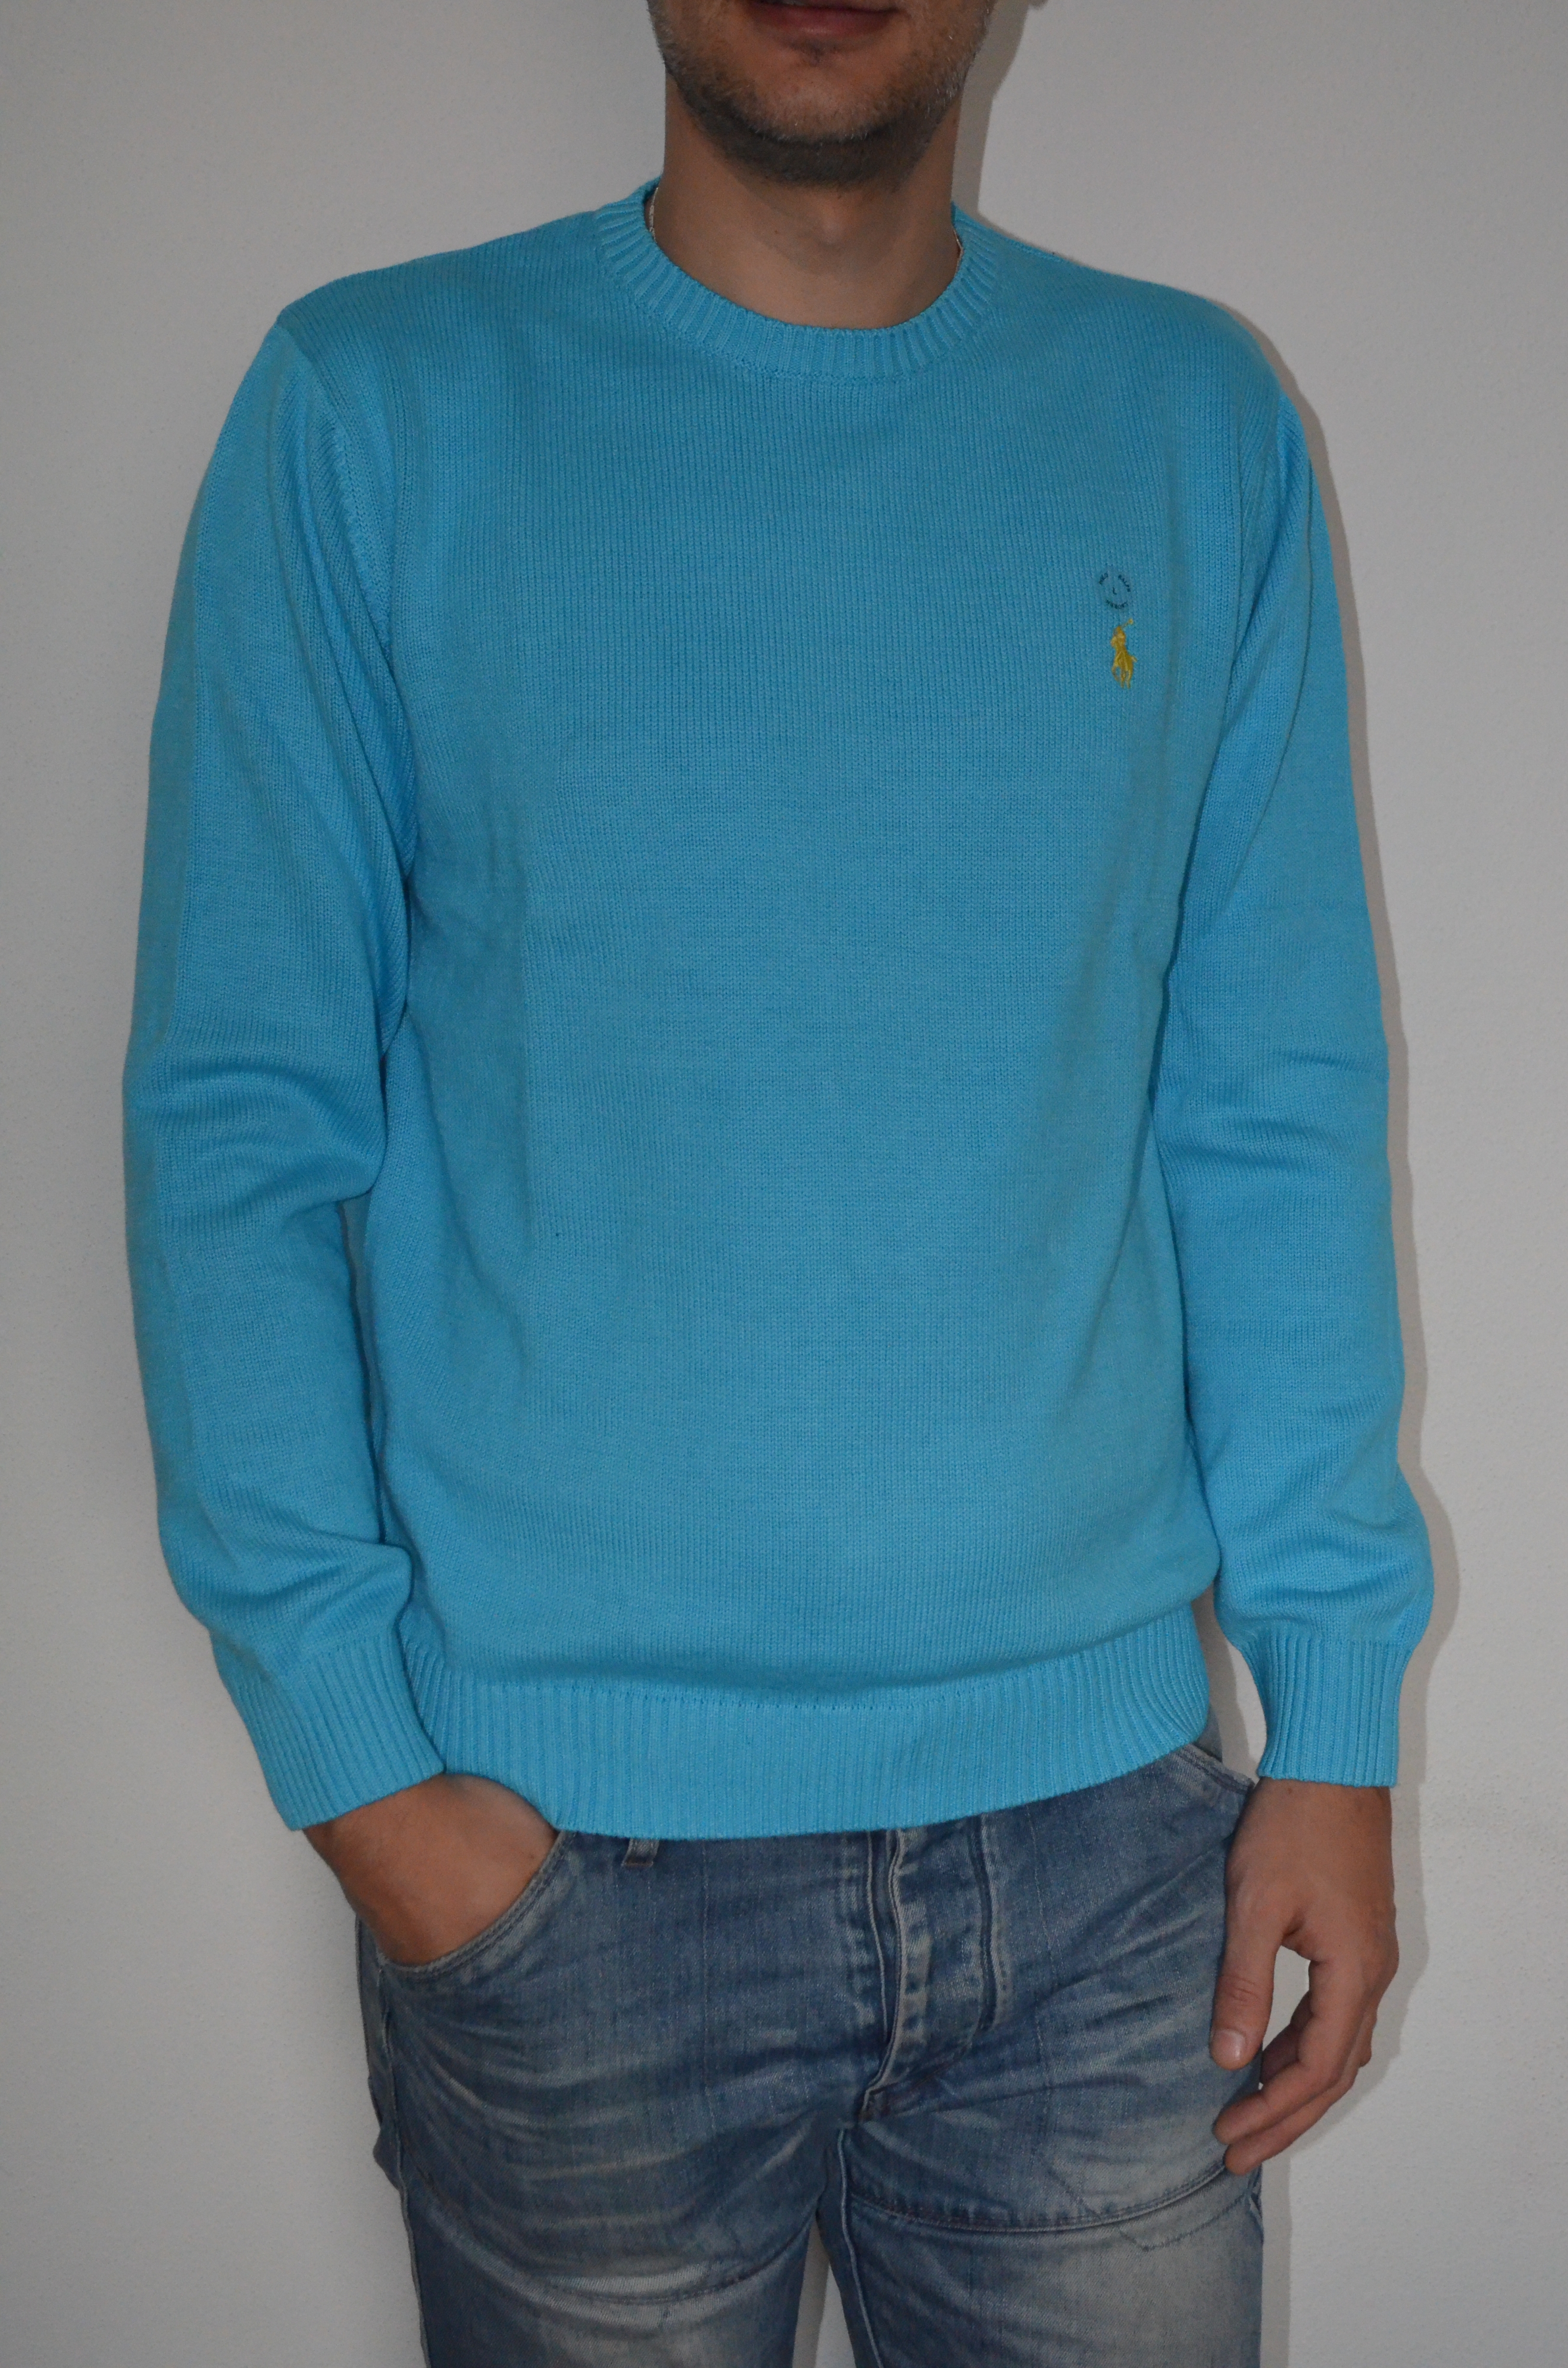 Ralph Lauren pánský svetr sv.modrý velikost: L